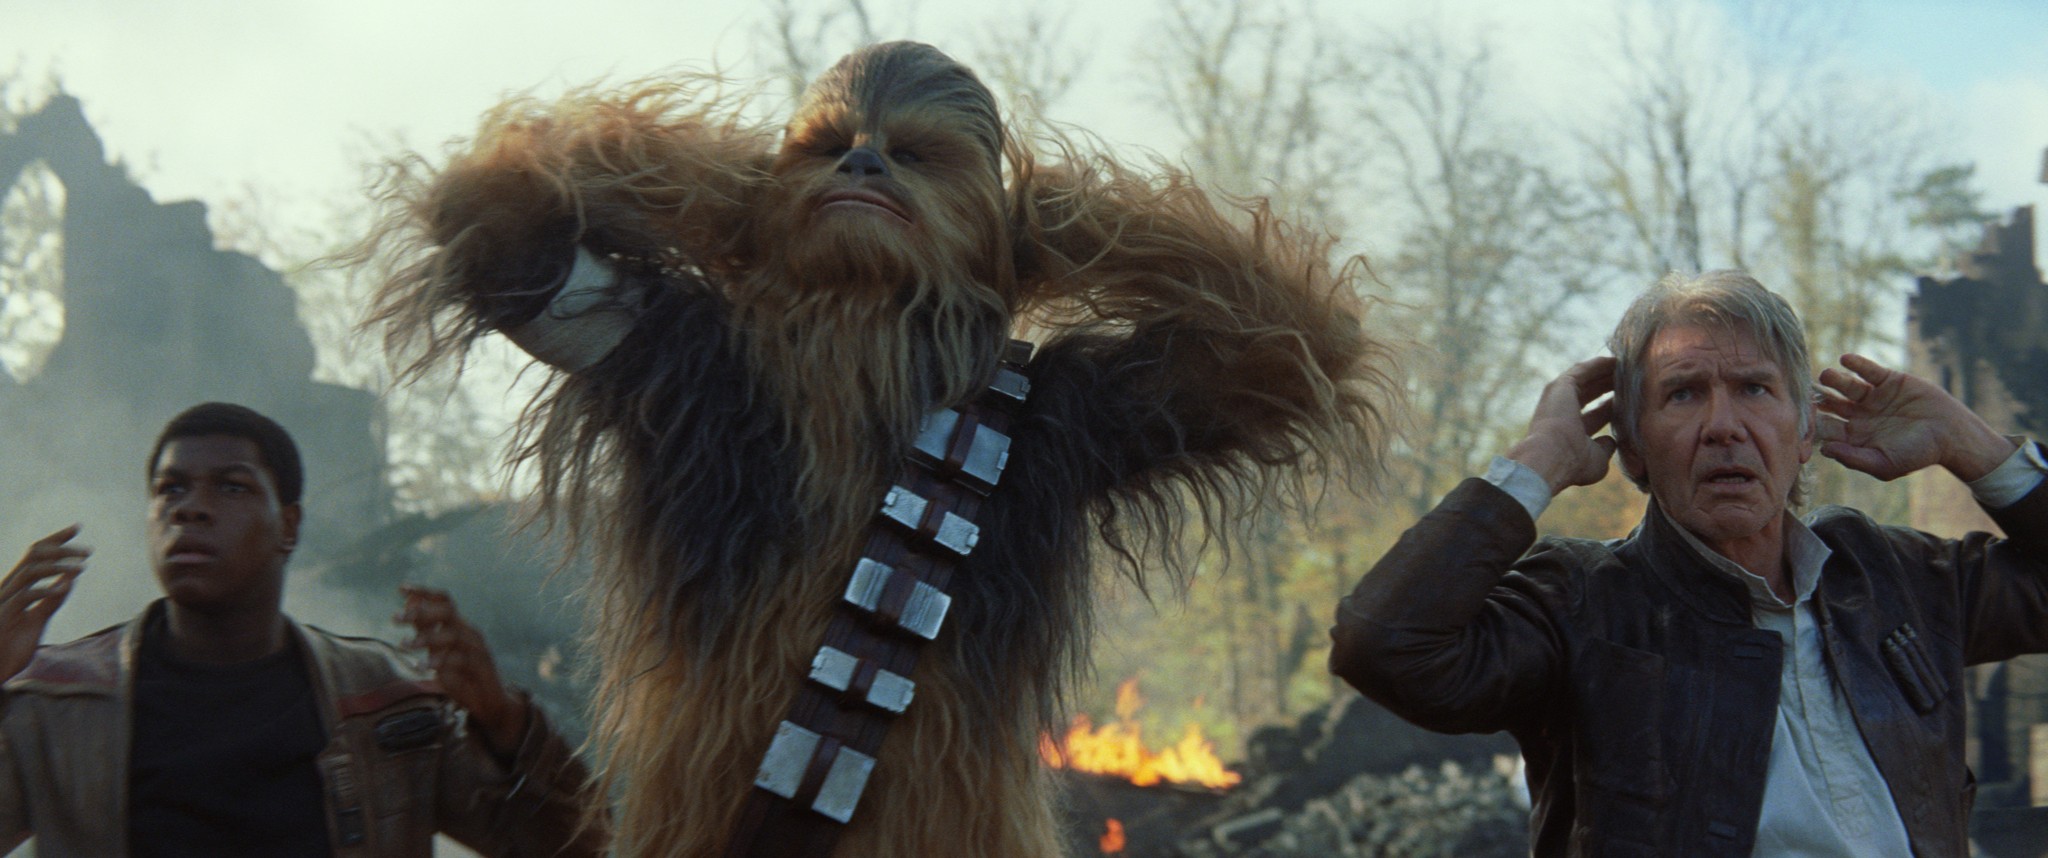 Download Han Solo Harrison Ford Chewbacca Finn Star Wars John Boyega Star Wars Movie Star Wars 0015